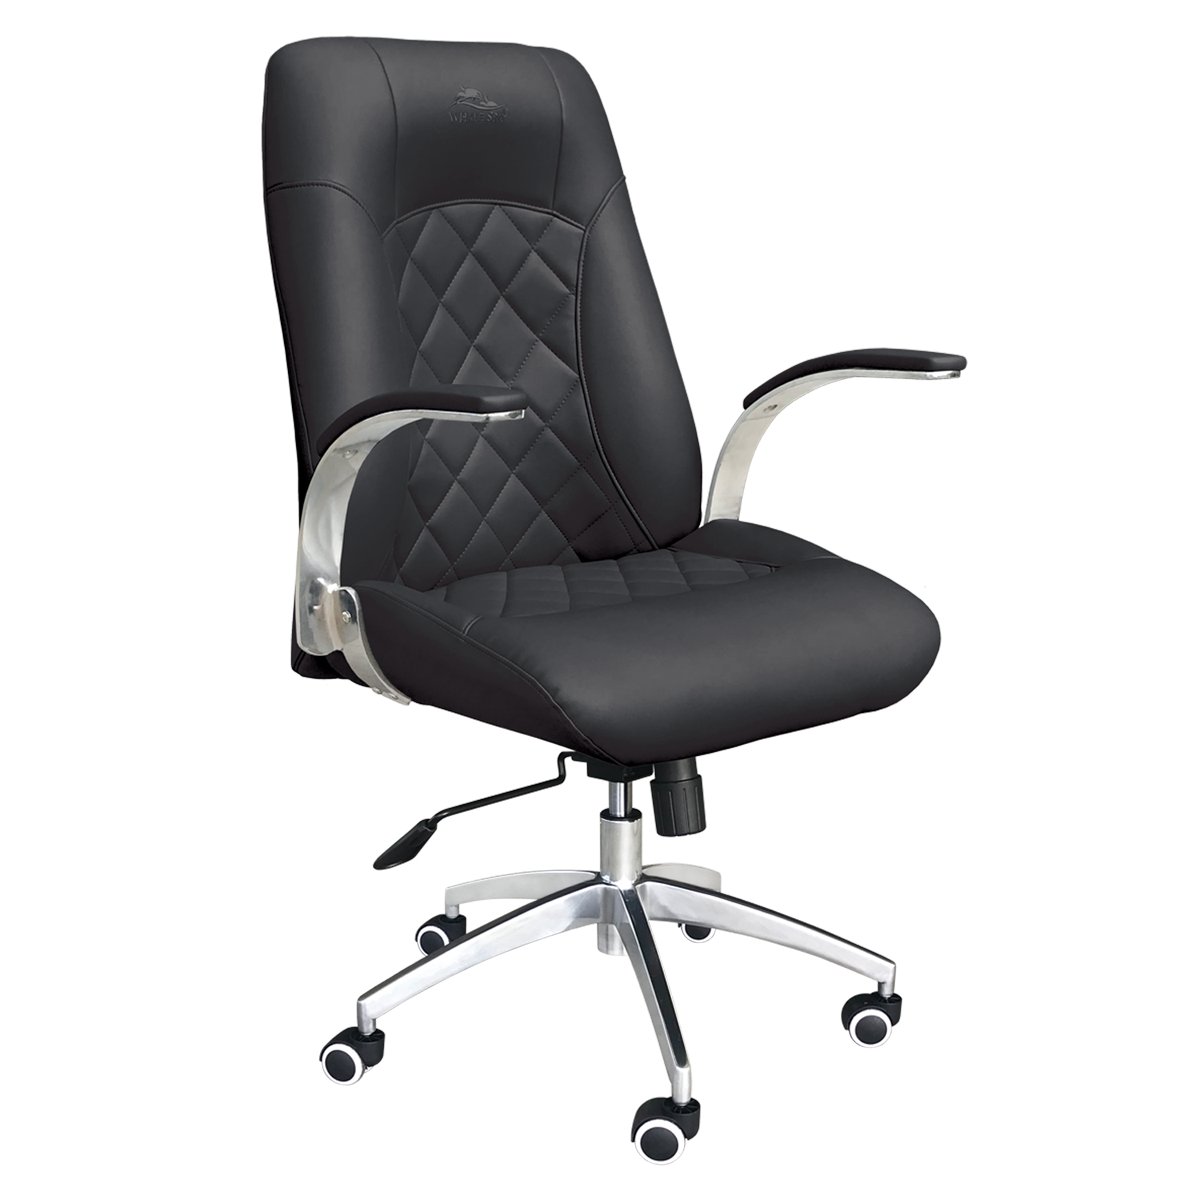 Whale Spa Black Customer Chair Diamond 3209 Nail Salon Manicure Chair for Clients | Salon and Spa Furniture